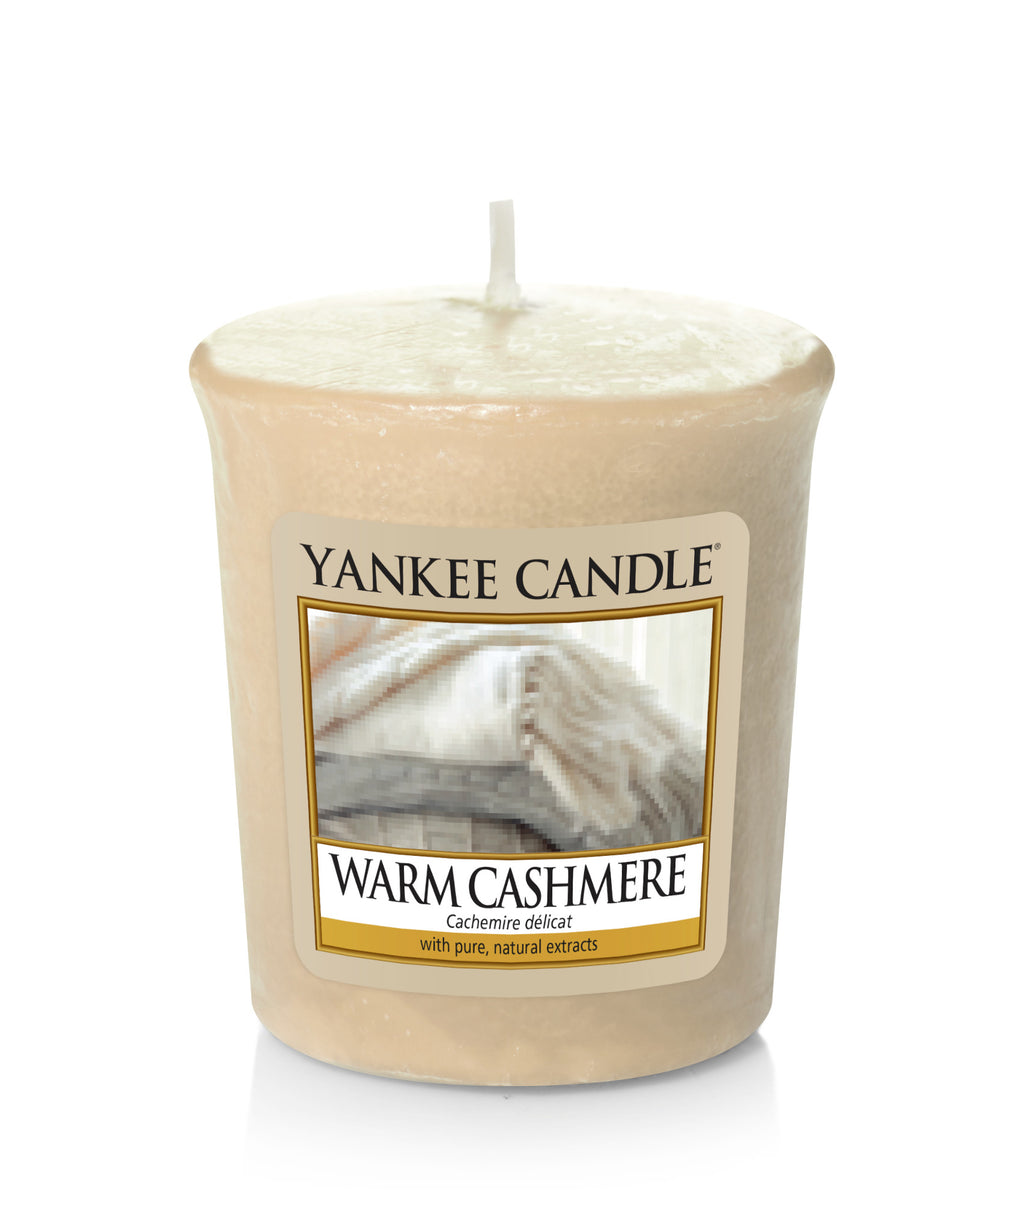 WARM CASHMERE -Yankee Candle- Candela Sampler